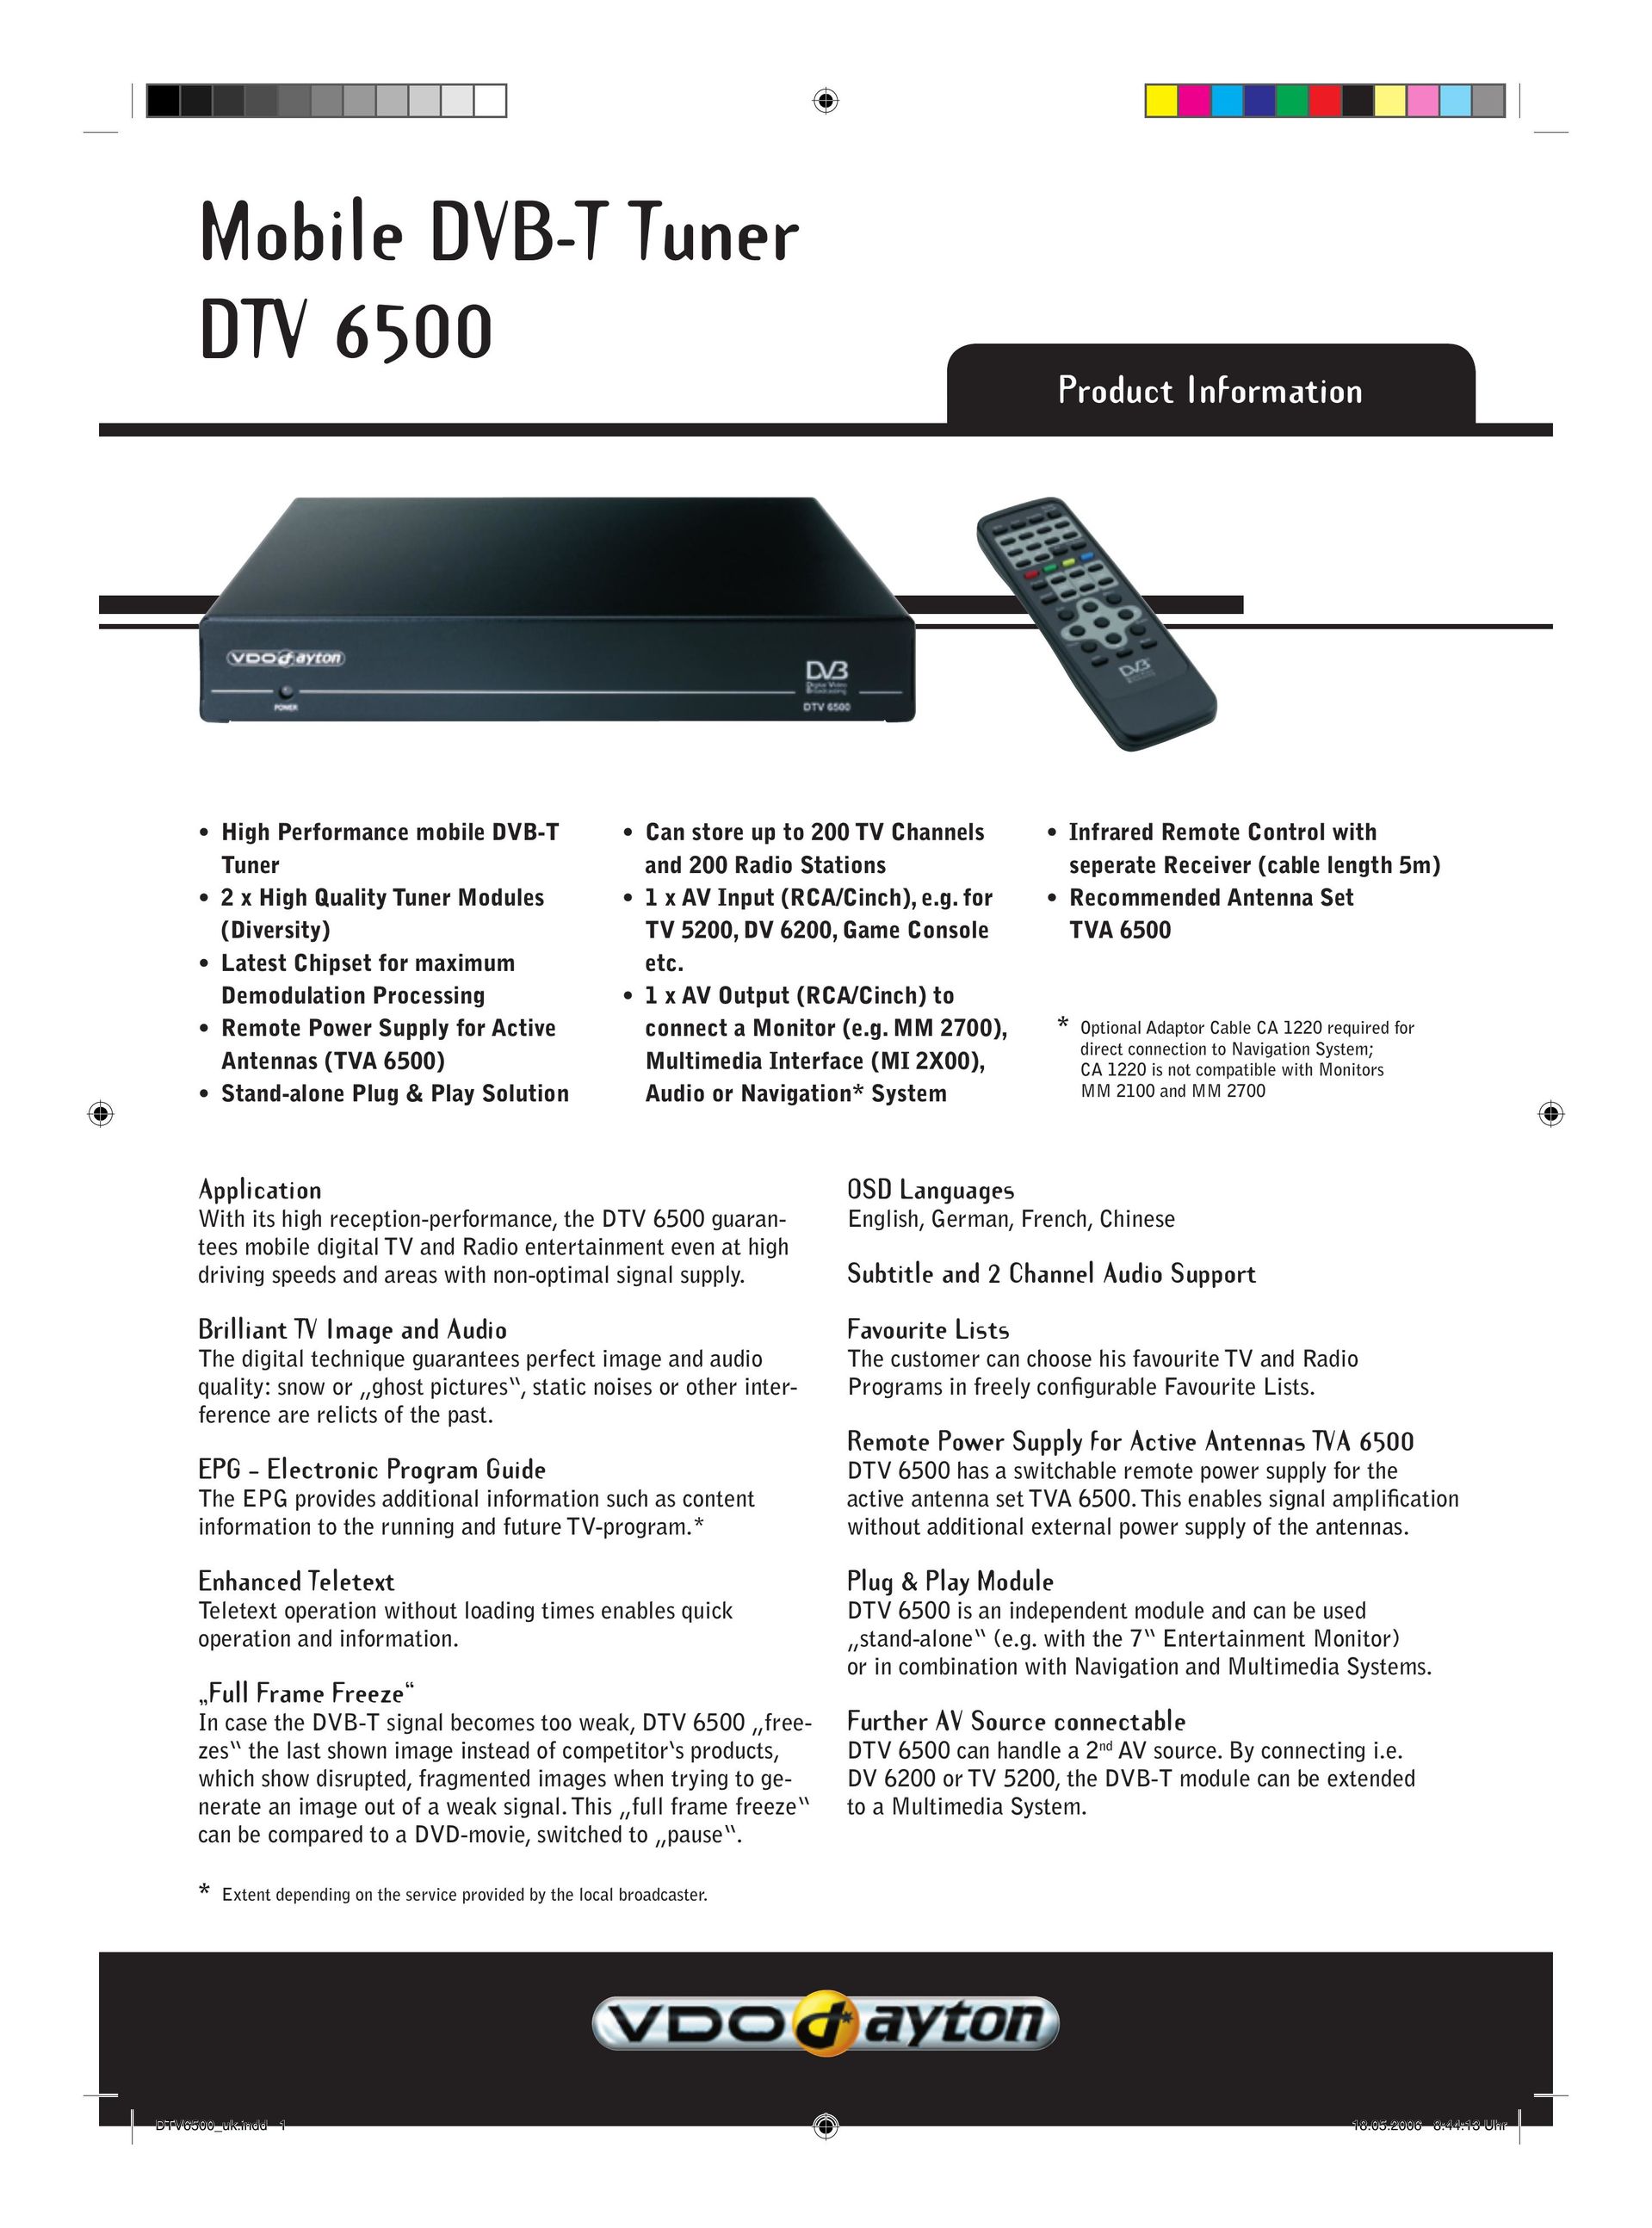 VDO Dayton DTV 6500 Car Satellite TV System User Manual